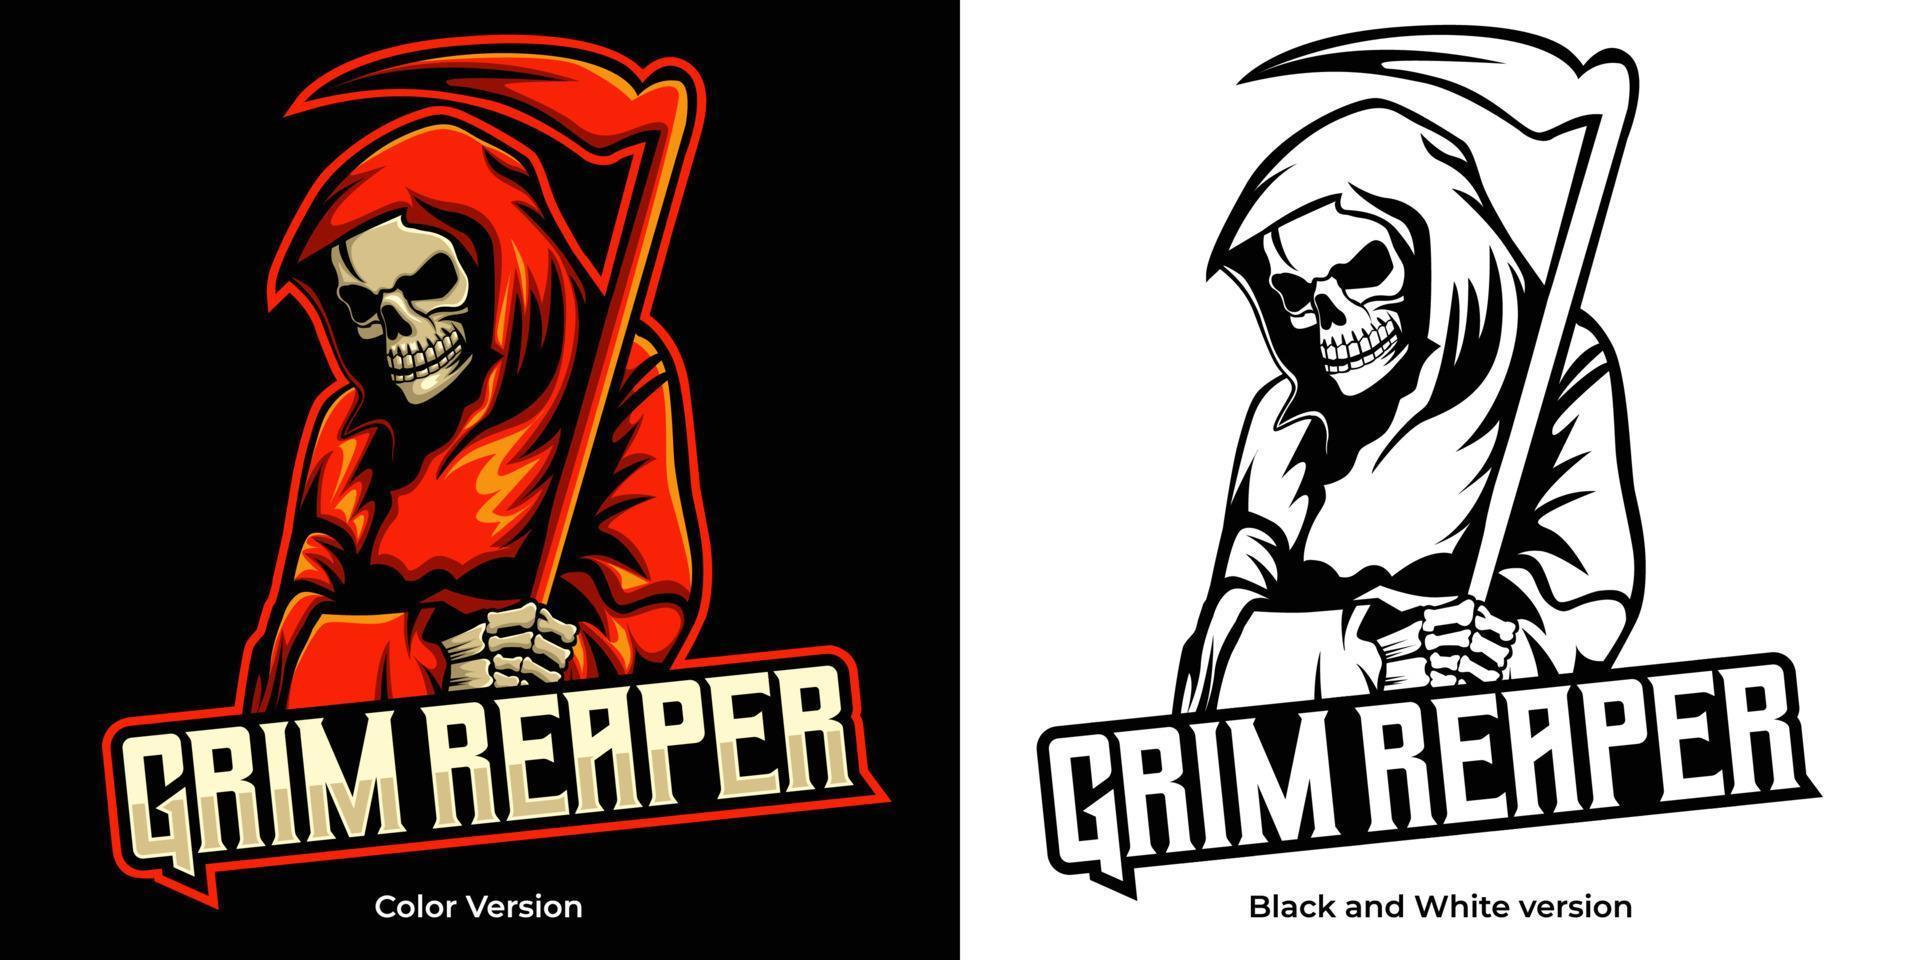 grim reaper esport logotyp maskot design vektor